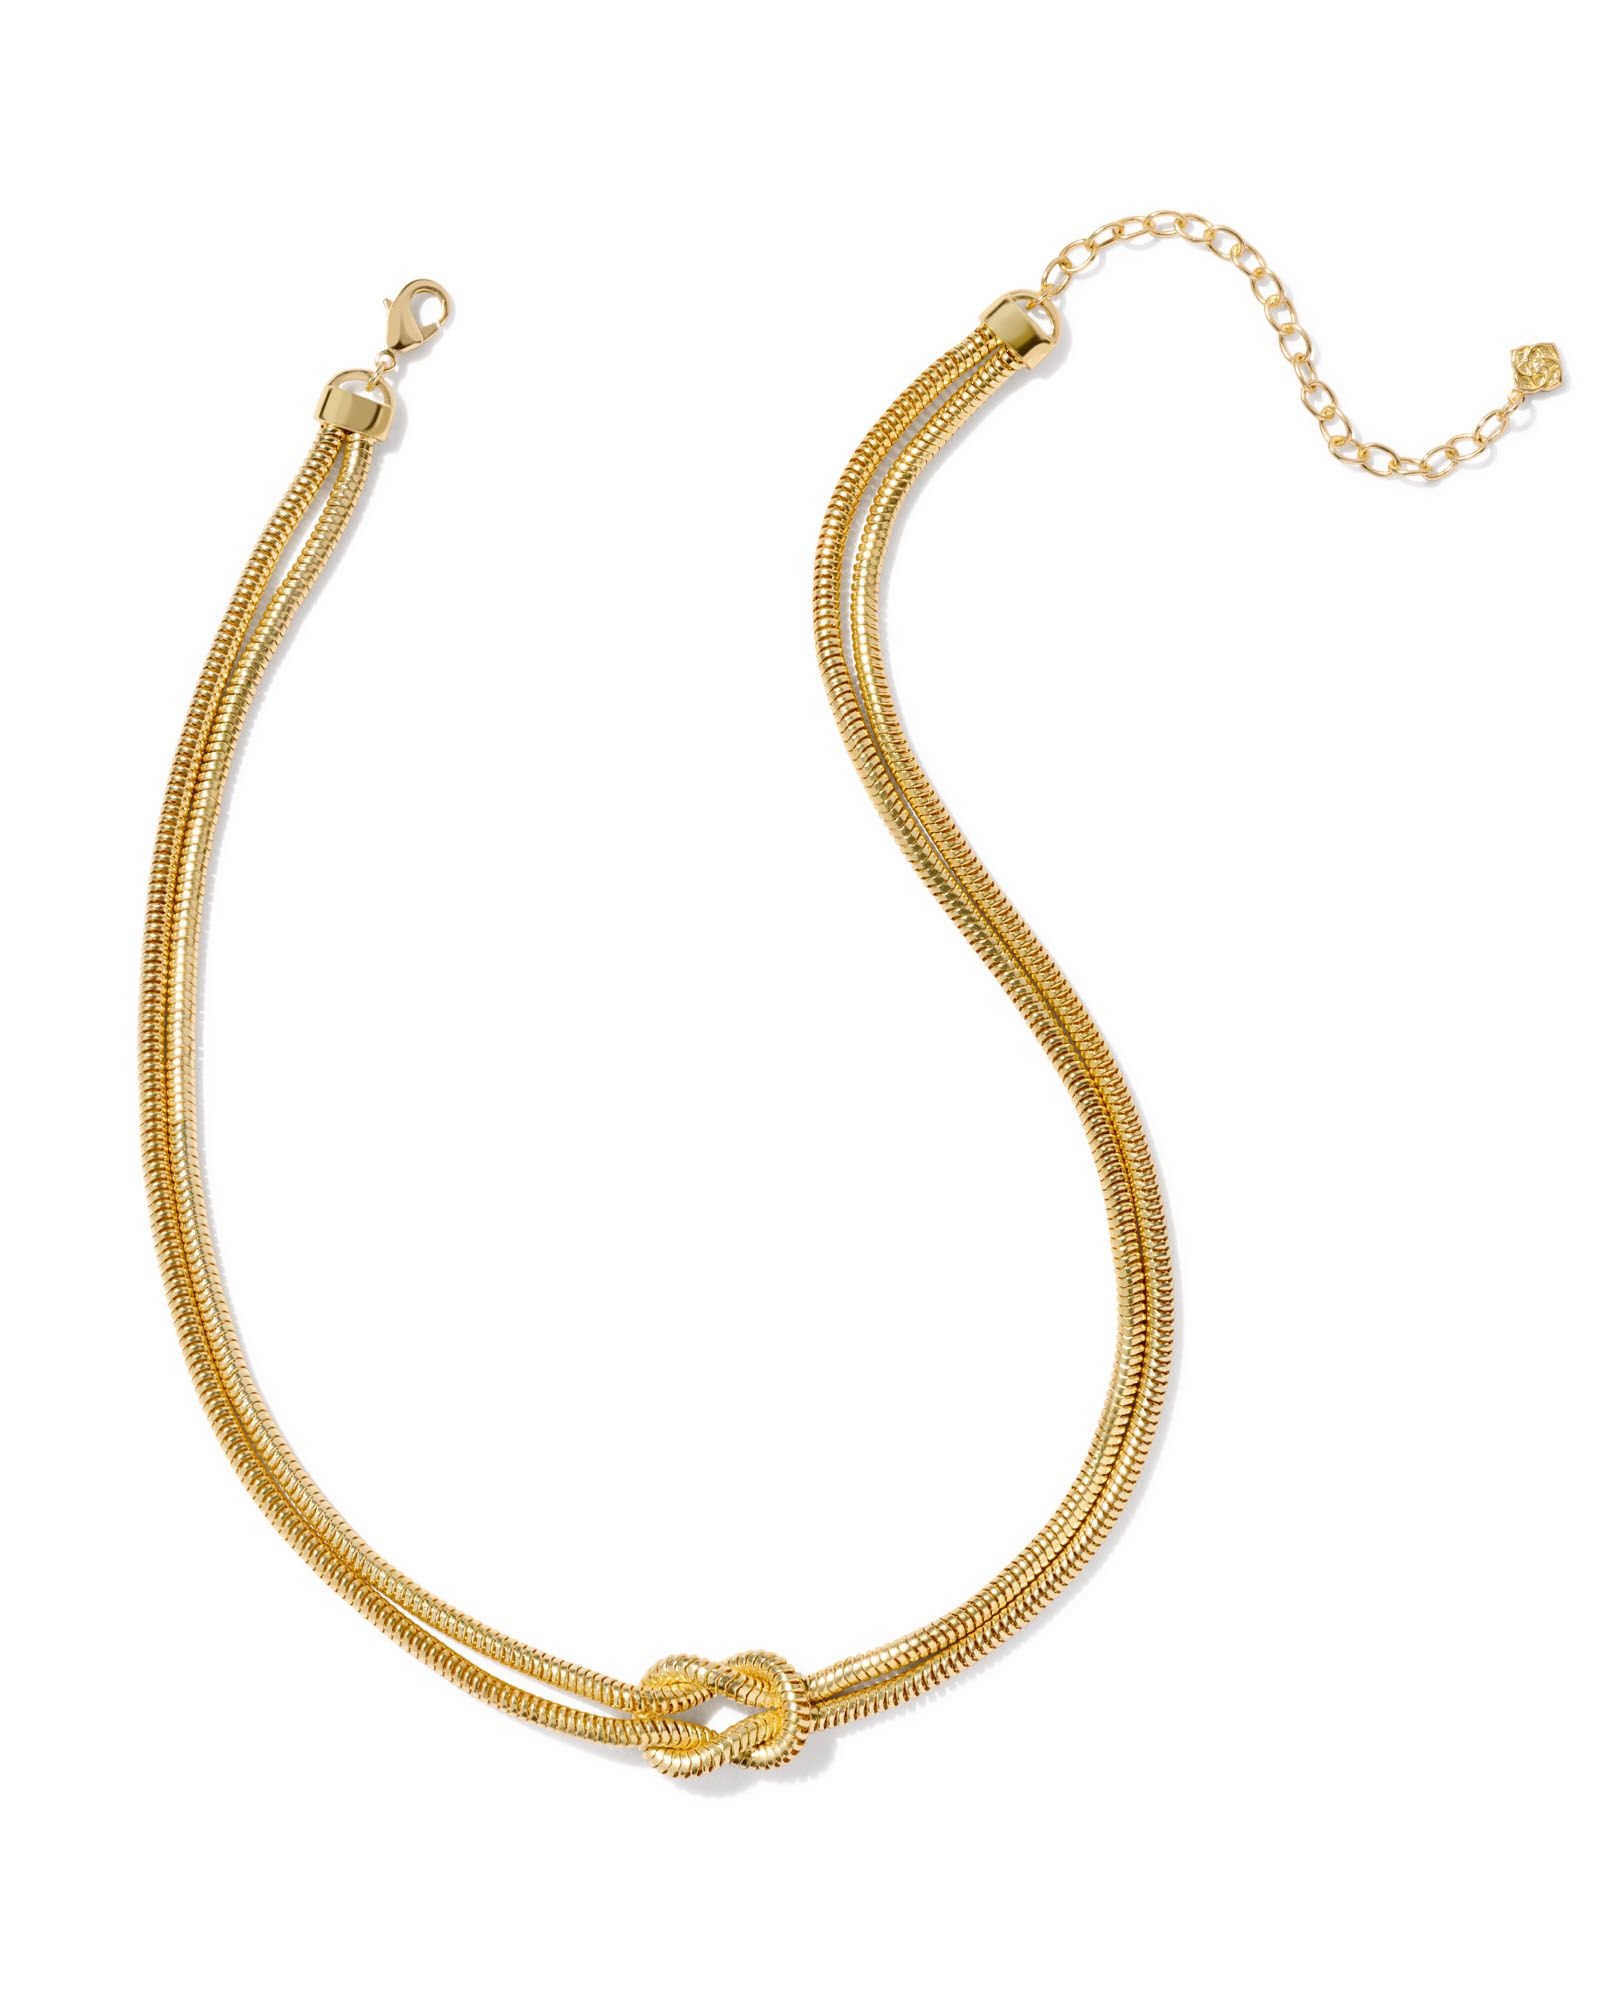 Annie Chain Necklace in Gold | Kendra Scott | Kendra Scott